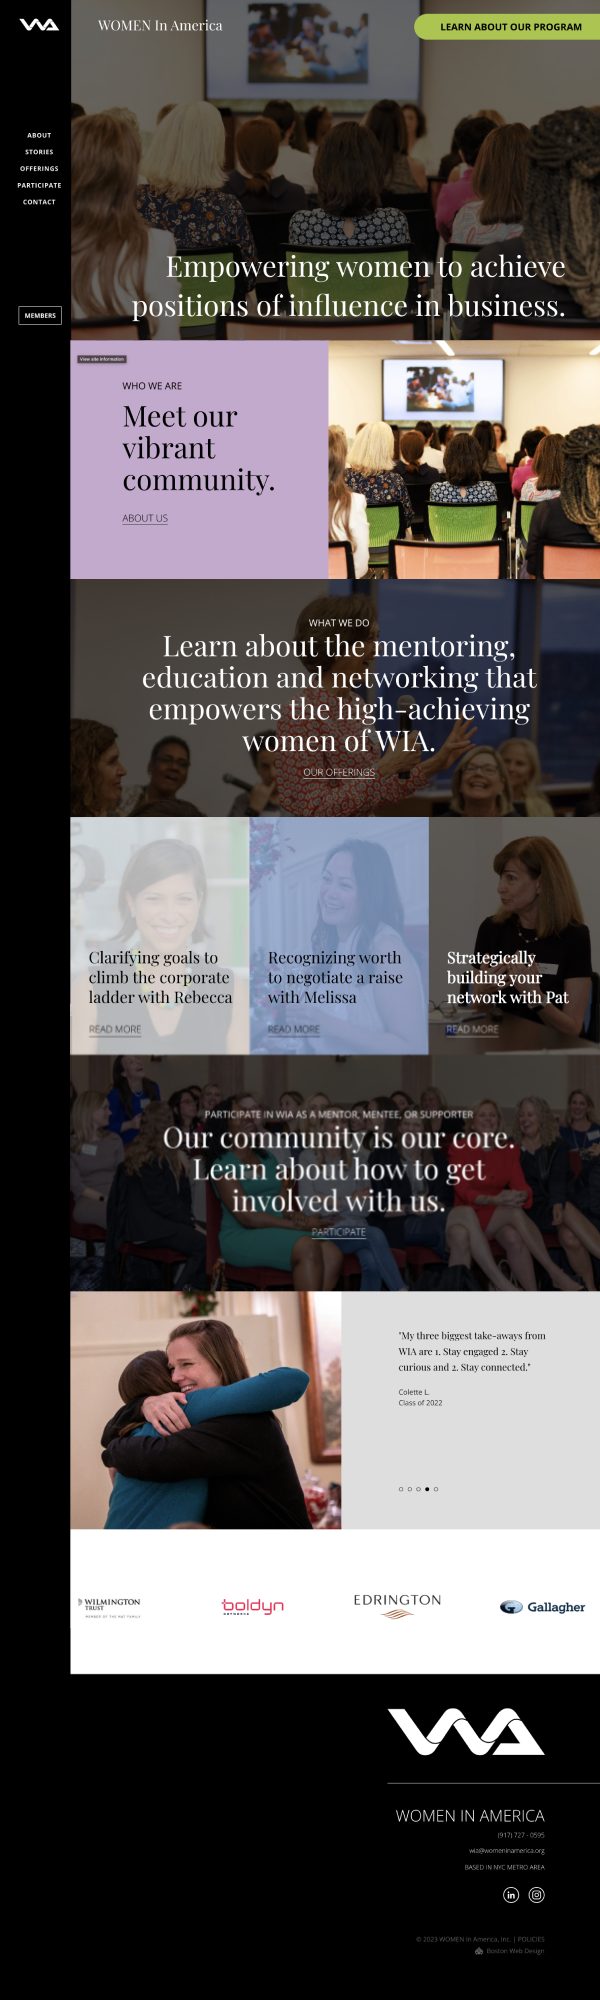 Women in America Website Example Long Image